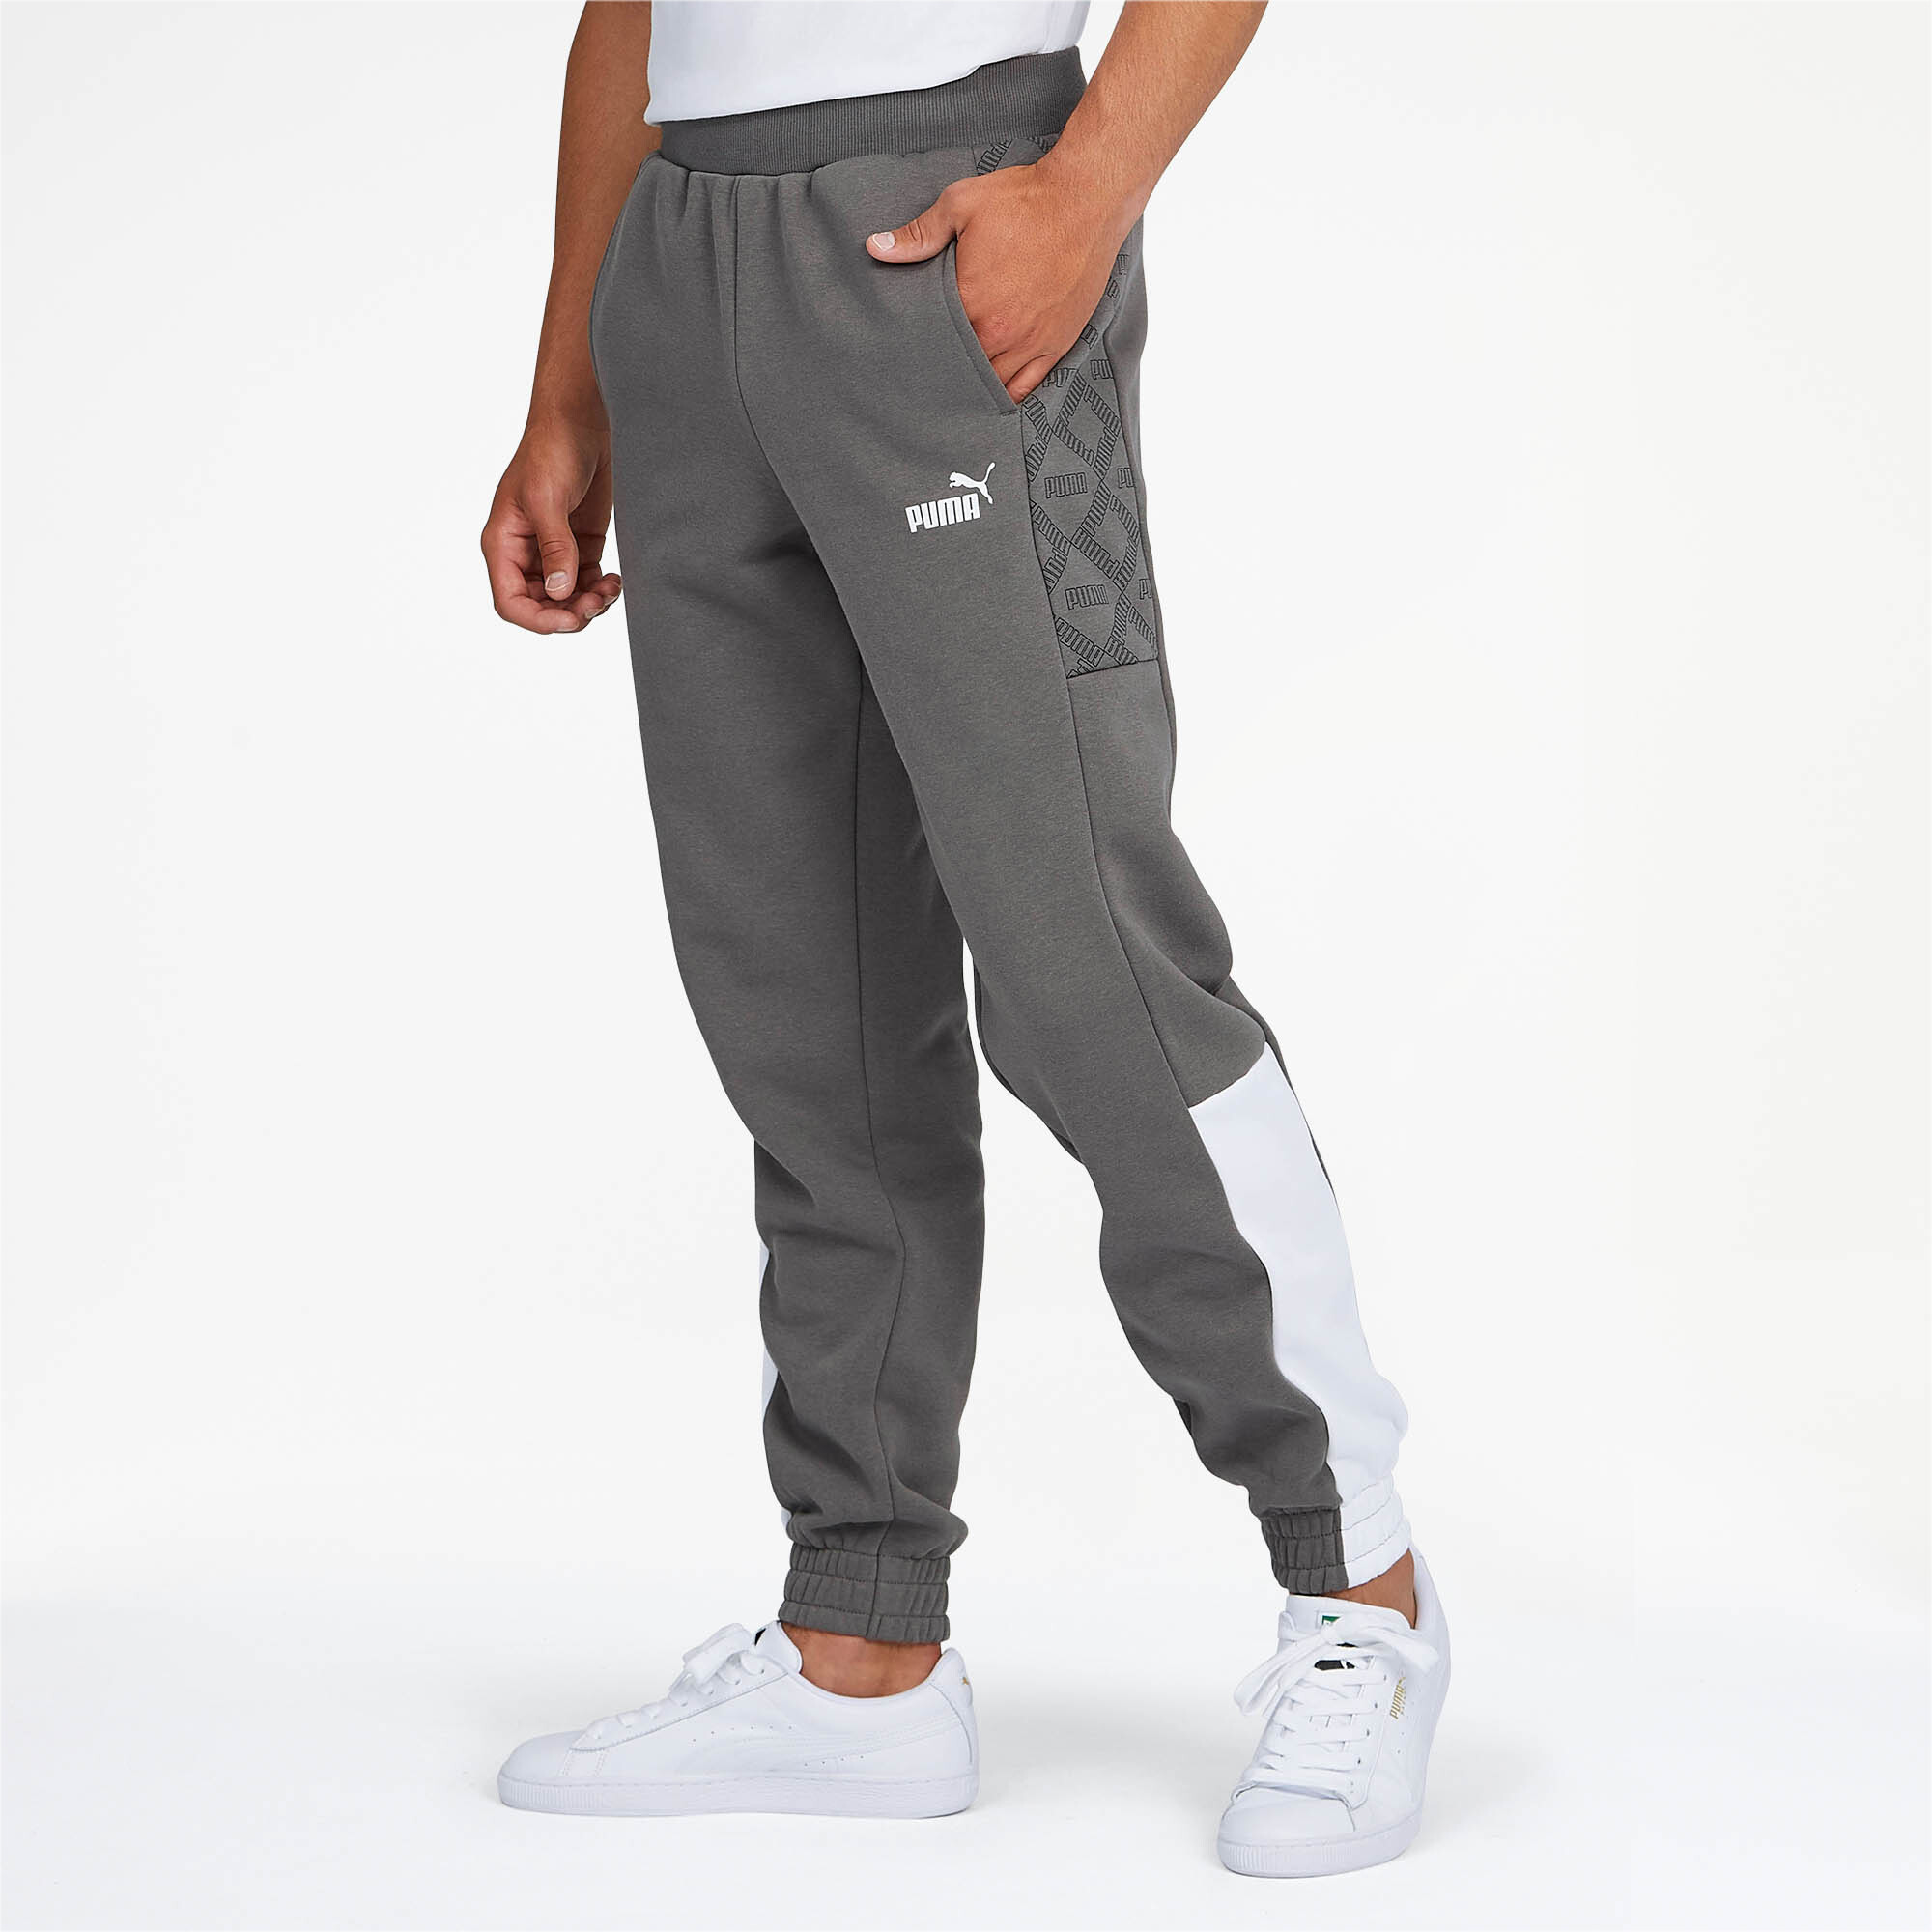 PUMA Logo AOP Pack Men's Sweatpants Men Knitted Pants Basics | eBay